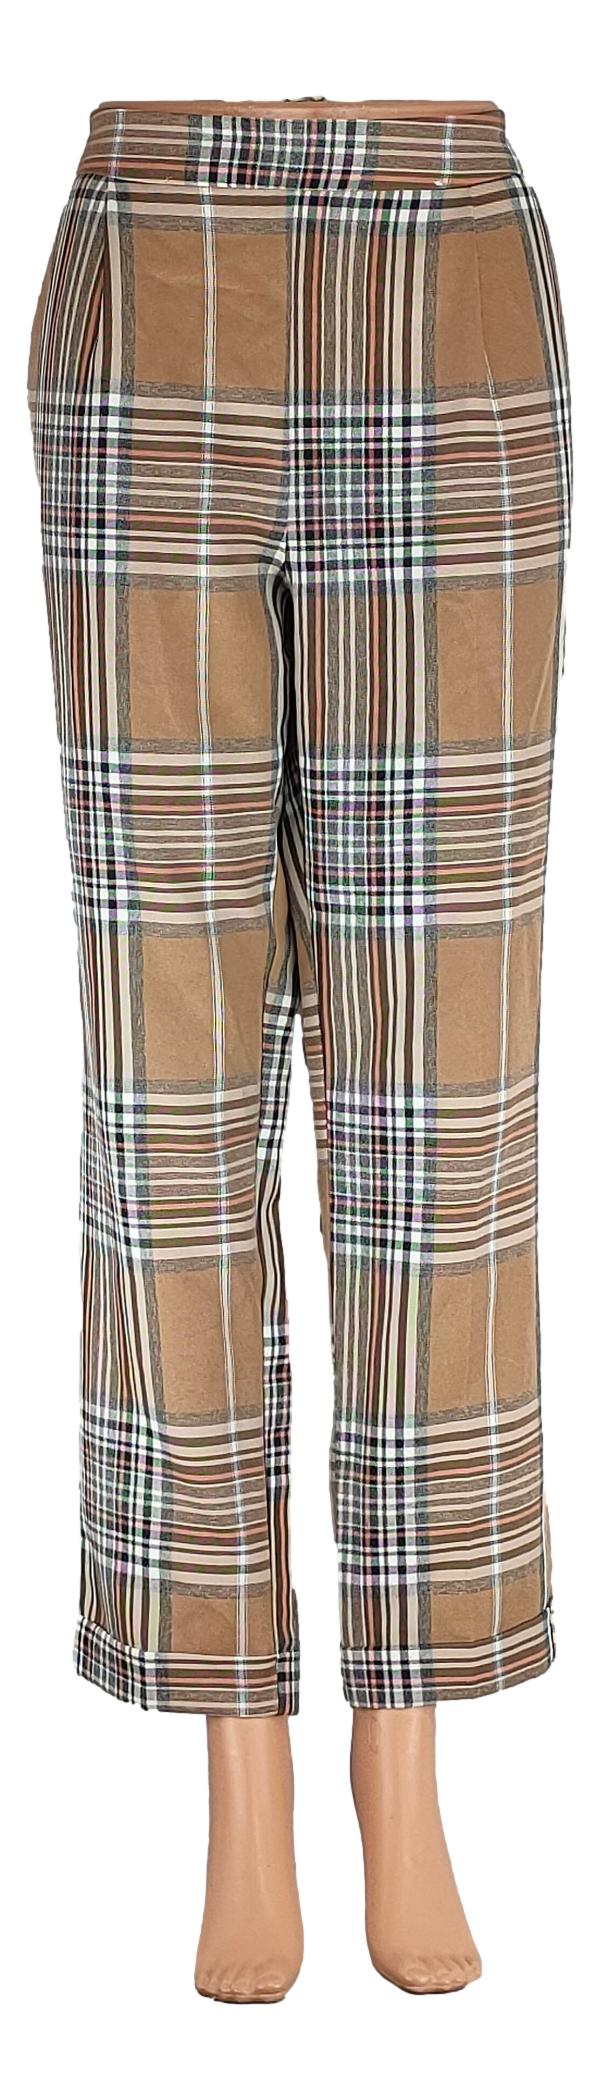 Pantalon Primark - taille 42